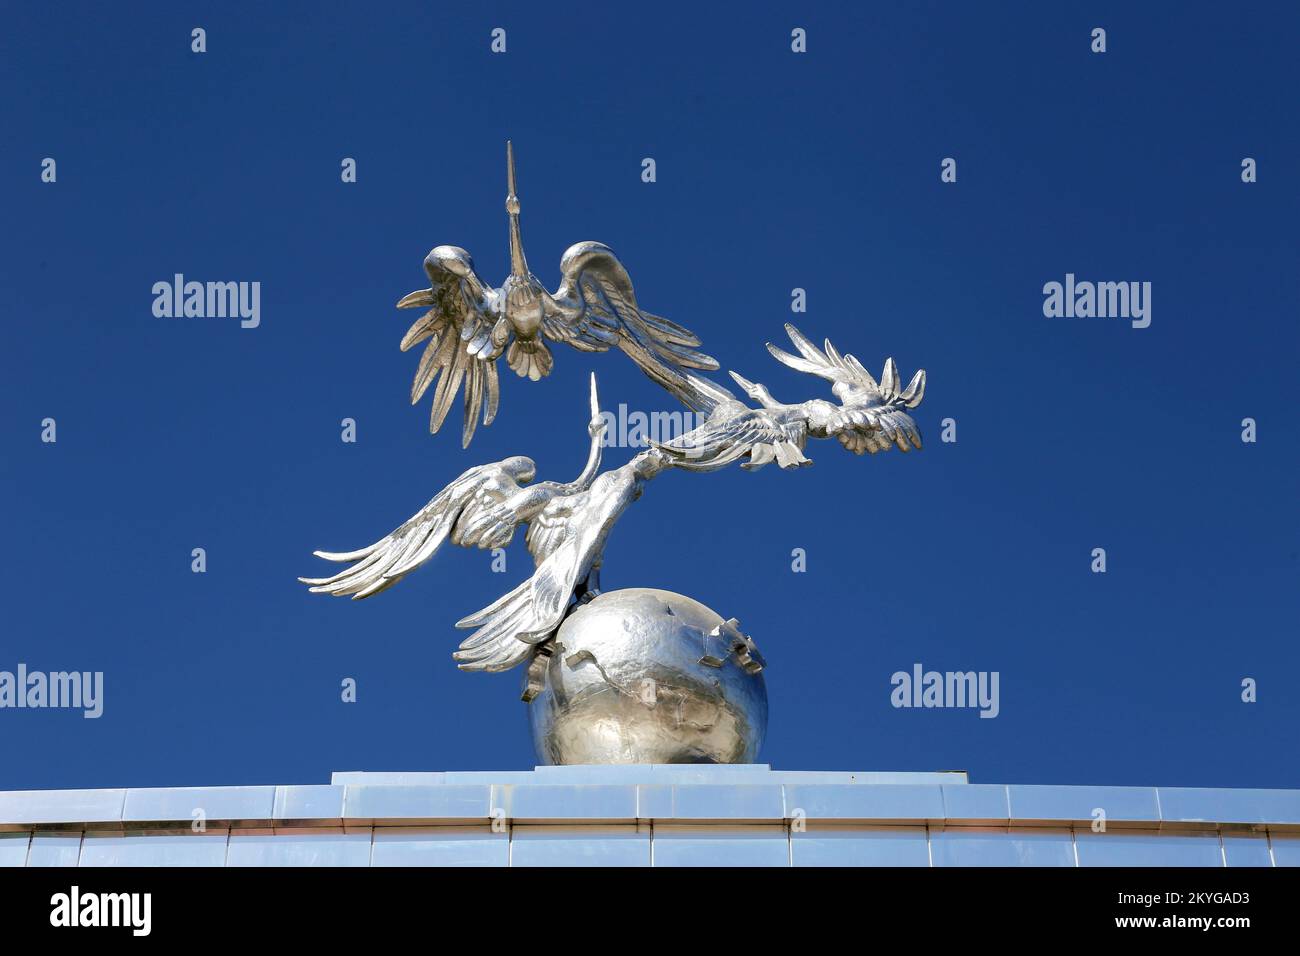 Storks symbolising peace and quietness, Mustakillik Maydoni (Independence Square), Central Tashkent, Tashkent Province, Uzbekistan, Central Asia Stock Photo